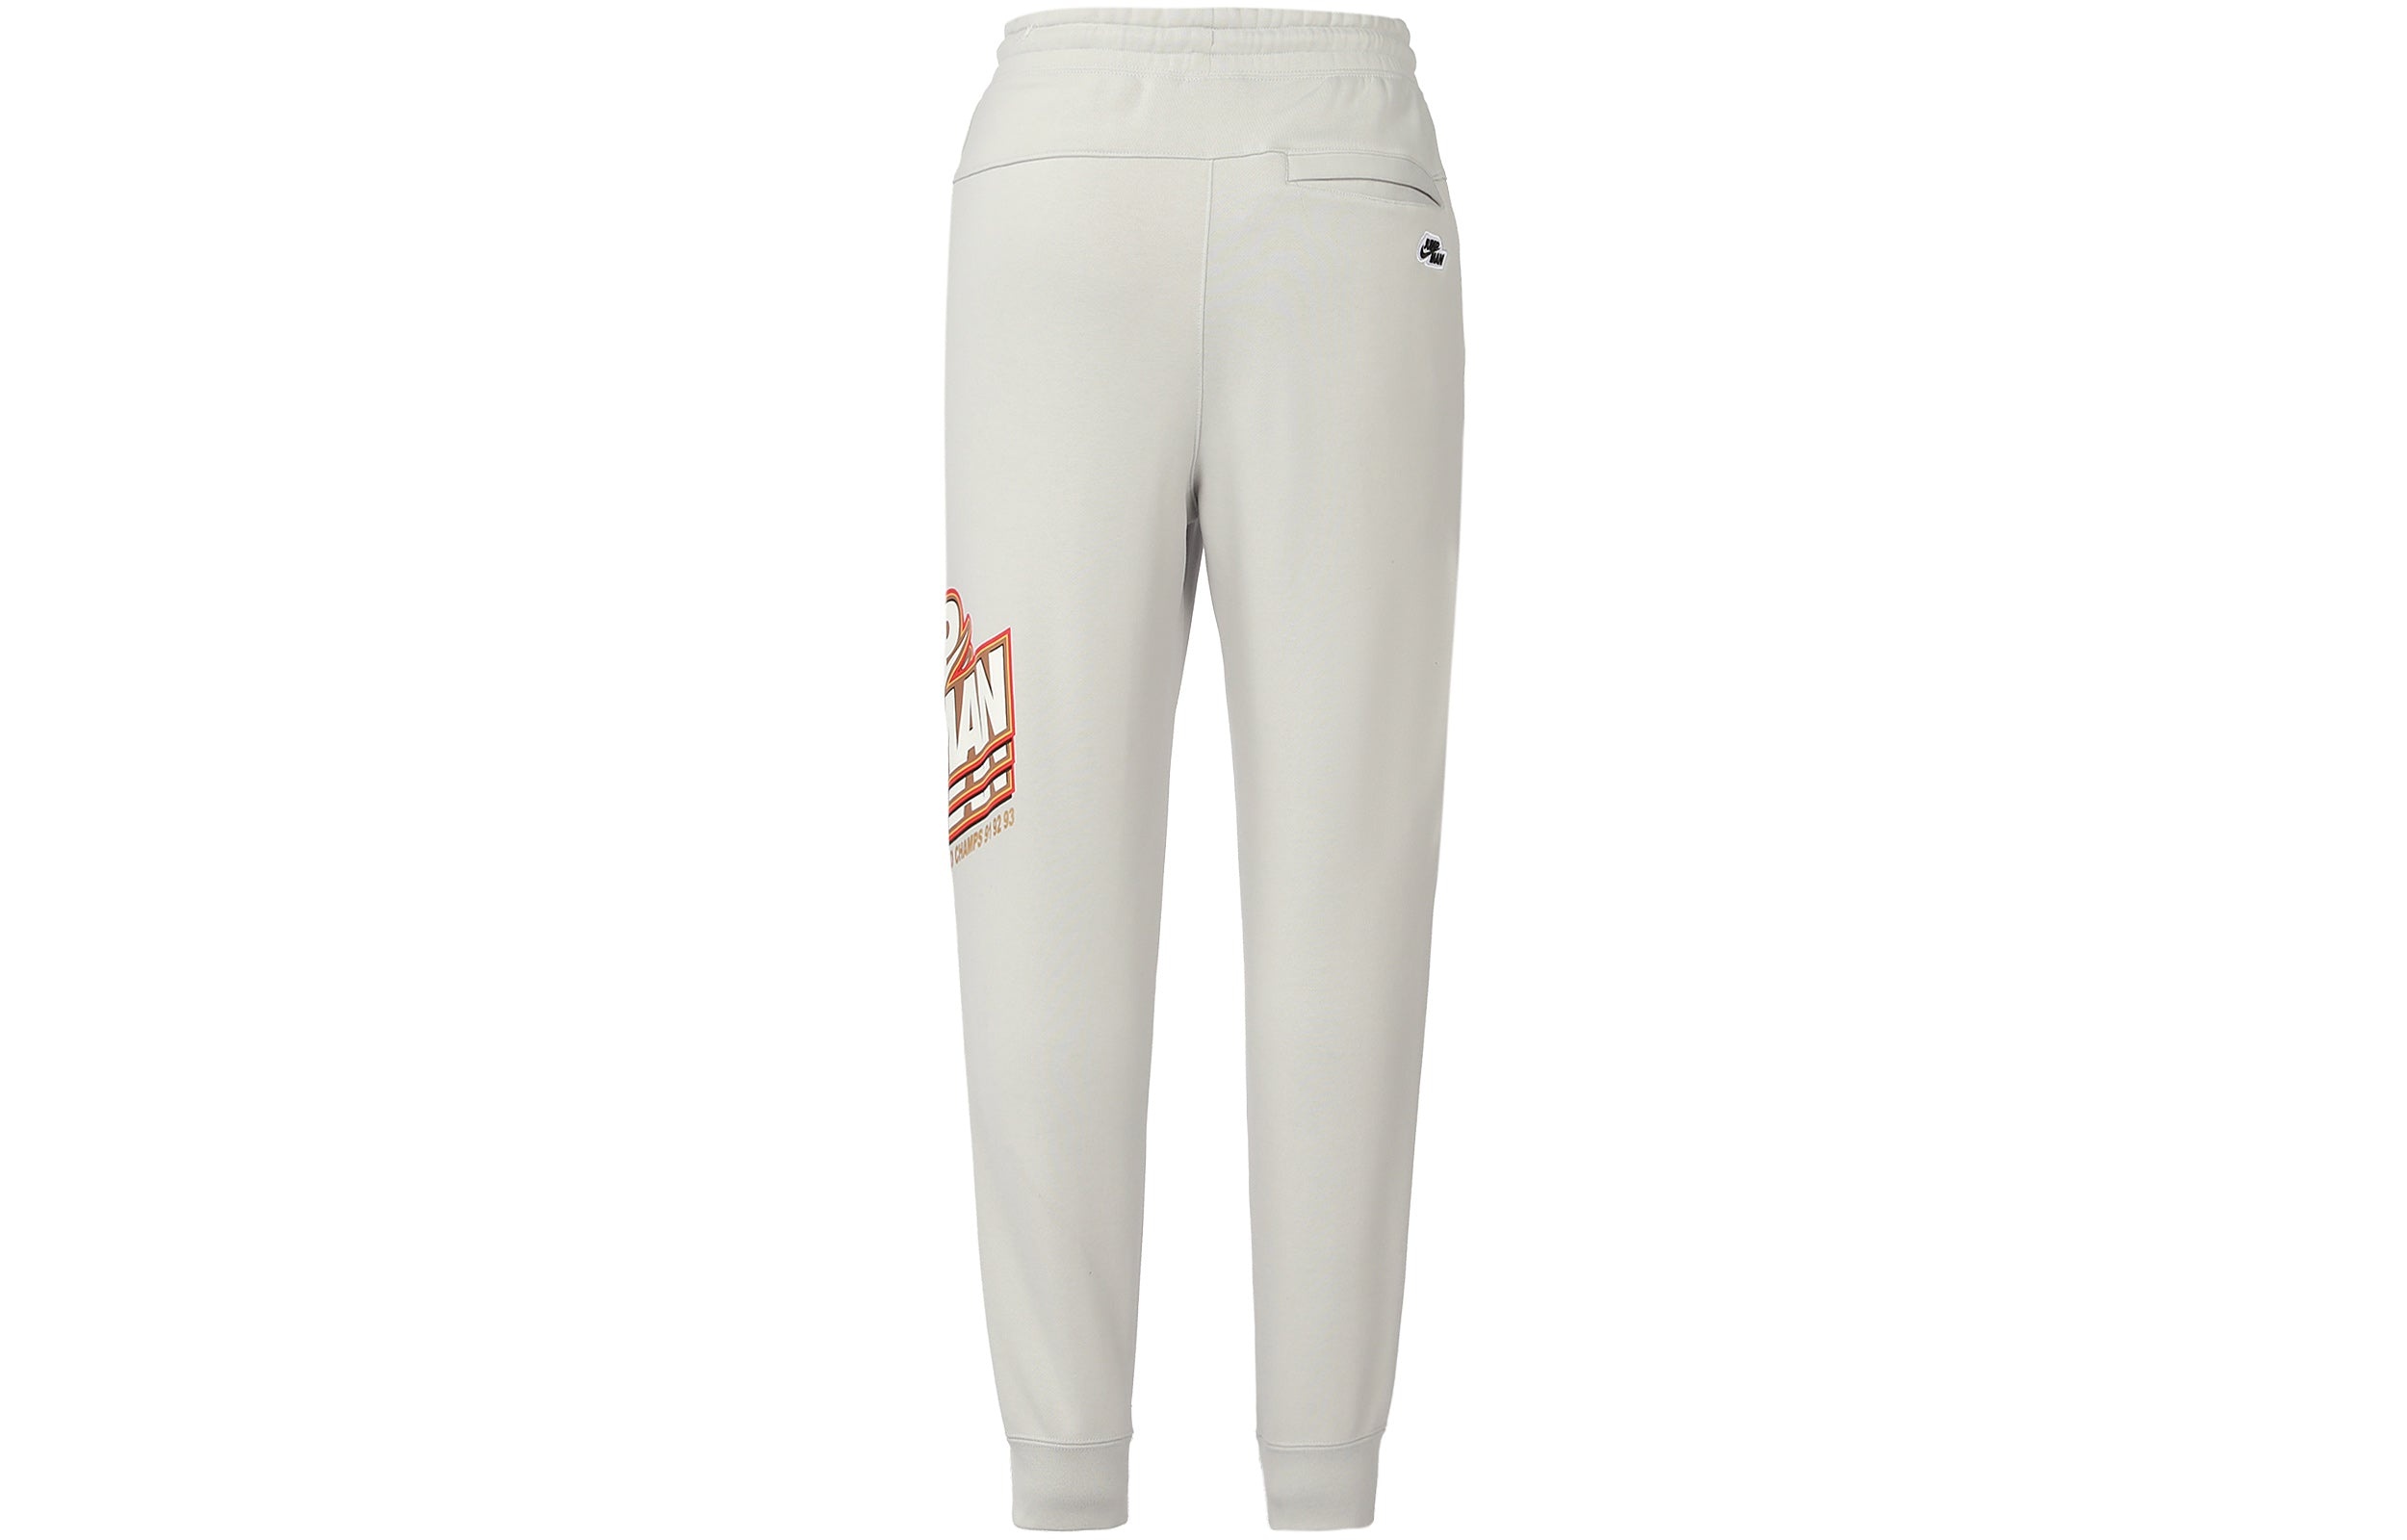 Men's Air Jordan Funny Printing Fleece Lined Sports Pants/Trousers/Joggers Light Grey DC9609-097 - 3